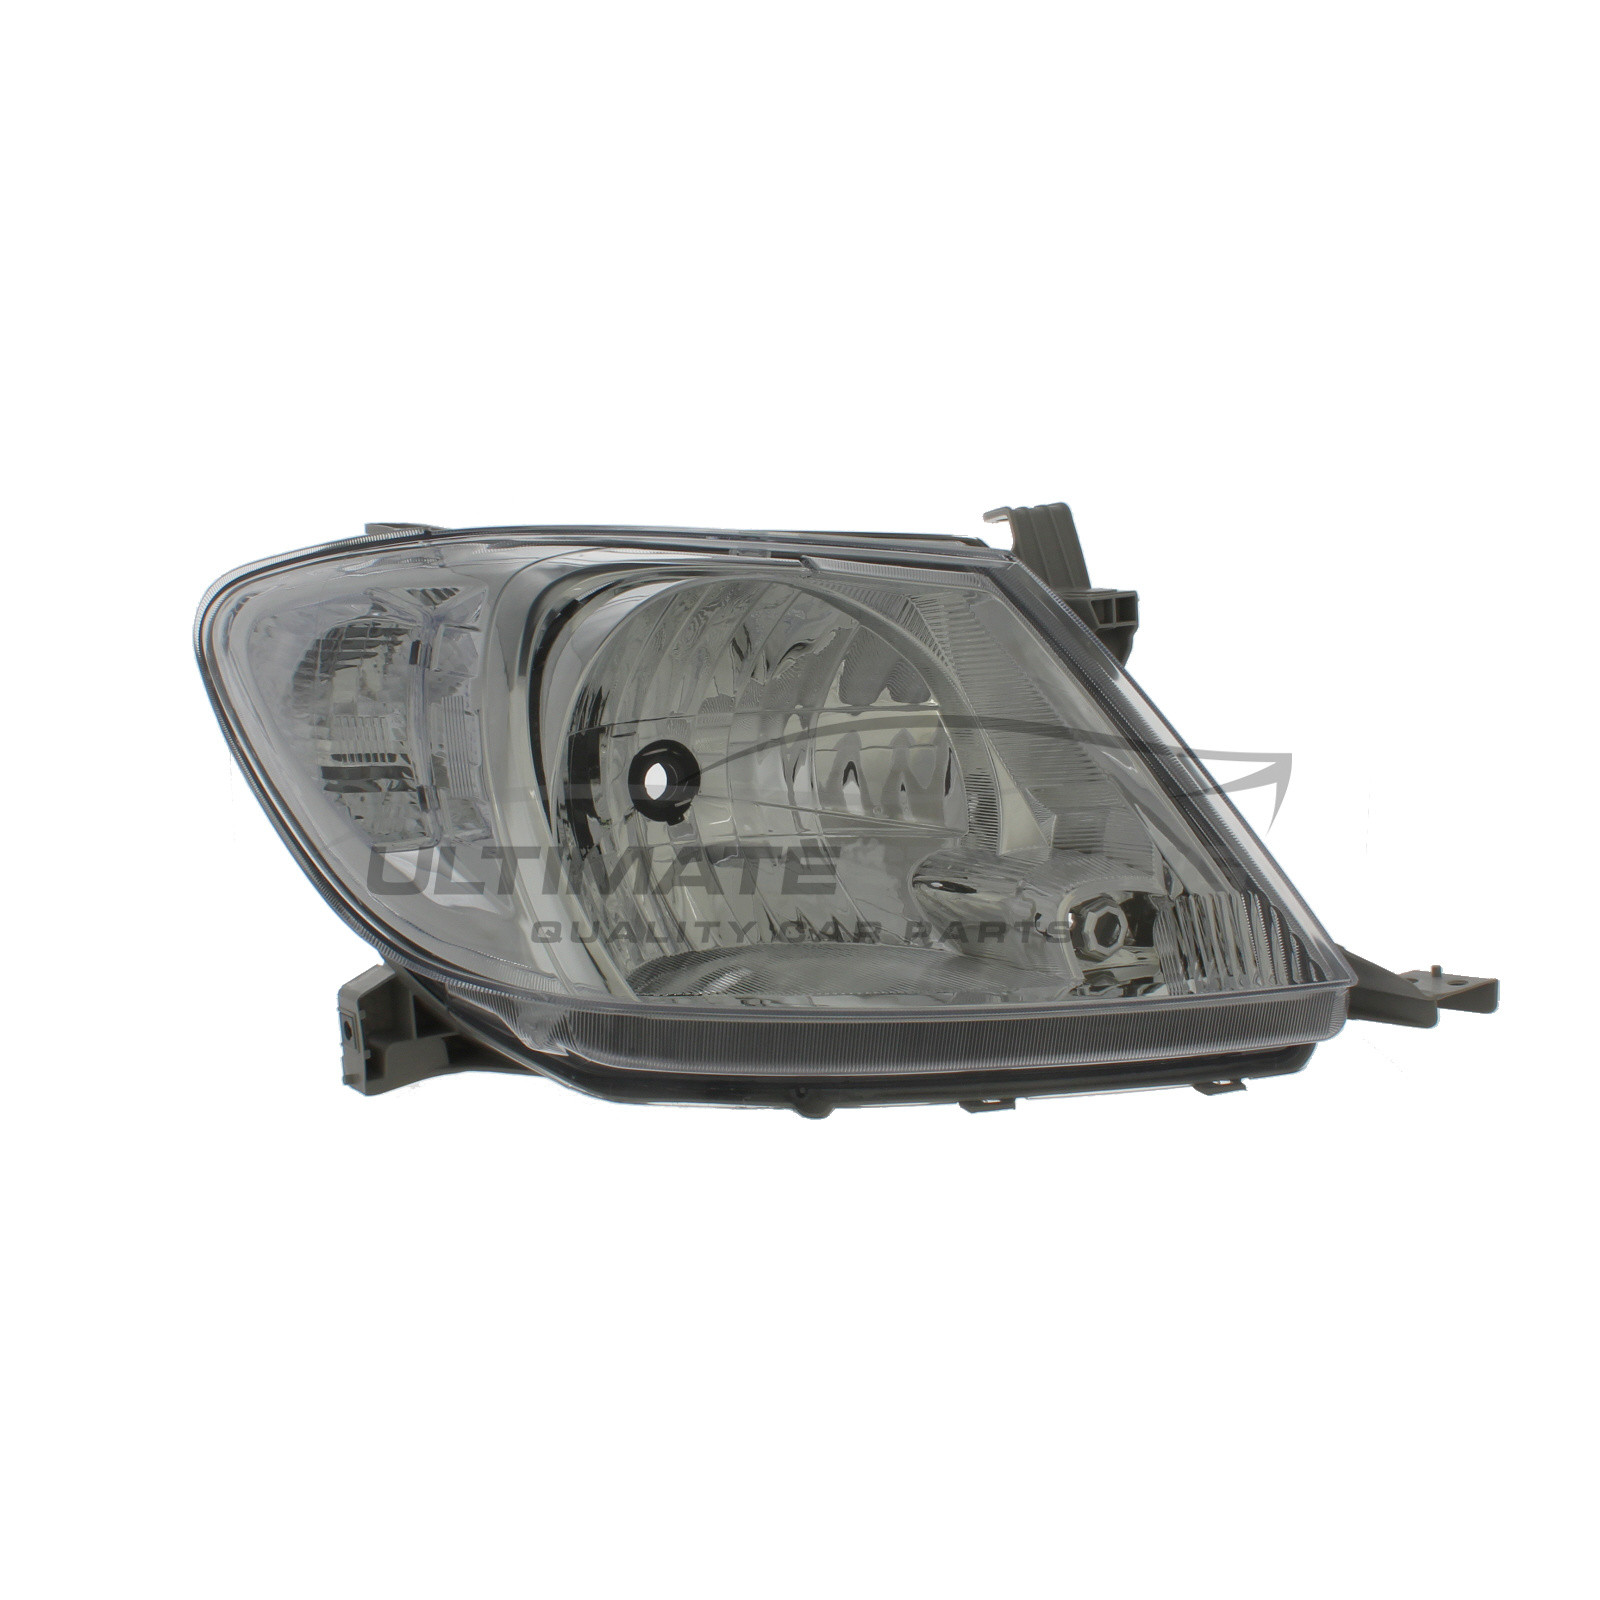 Headlight / Headlamp for Toyota Hi-Lux